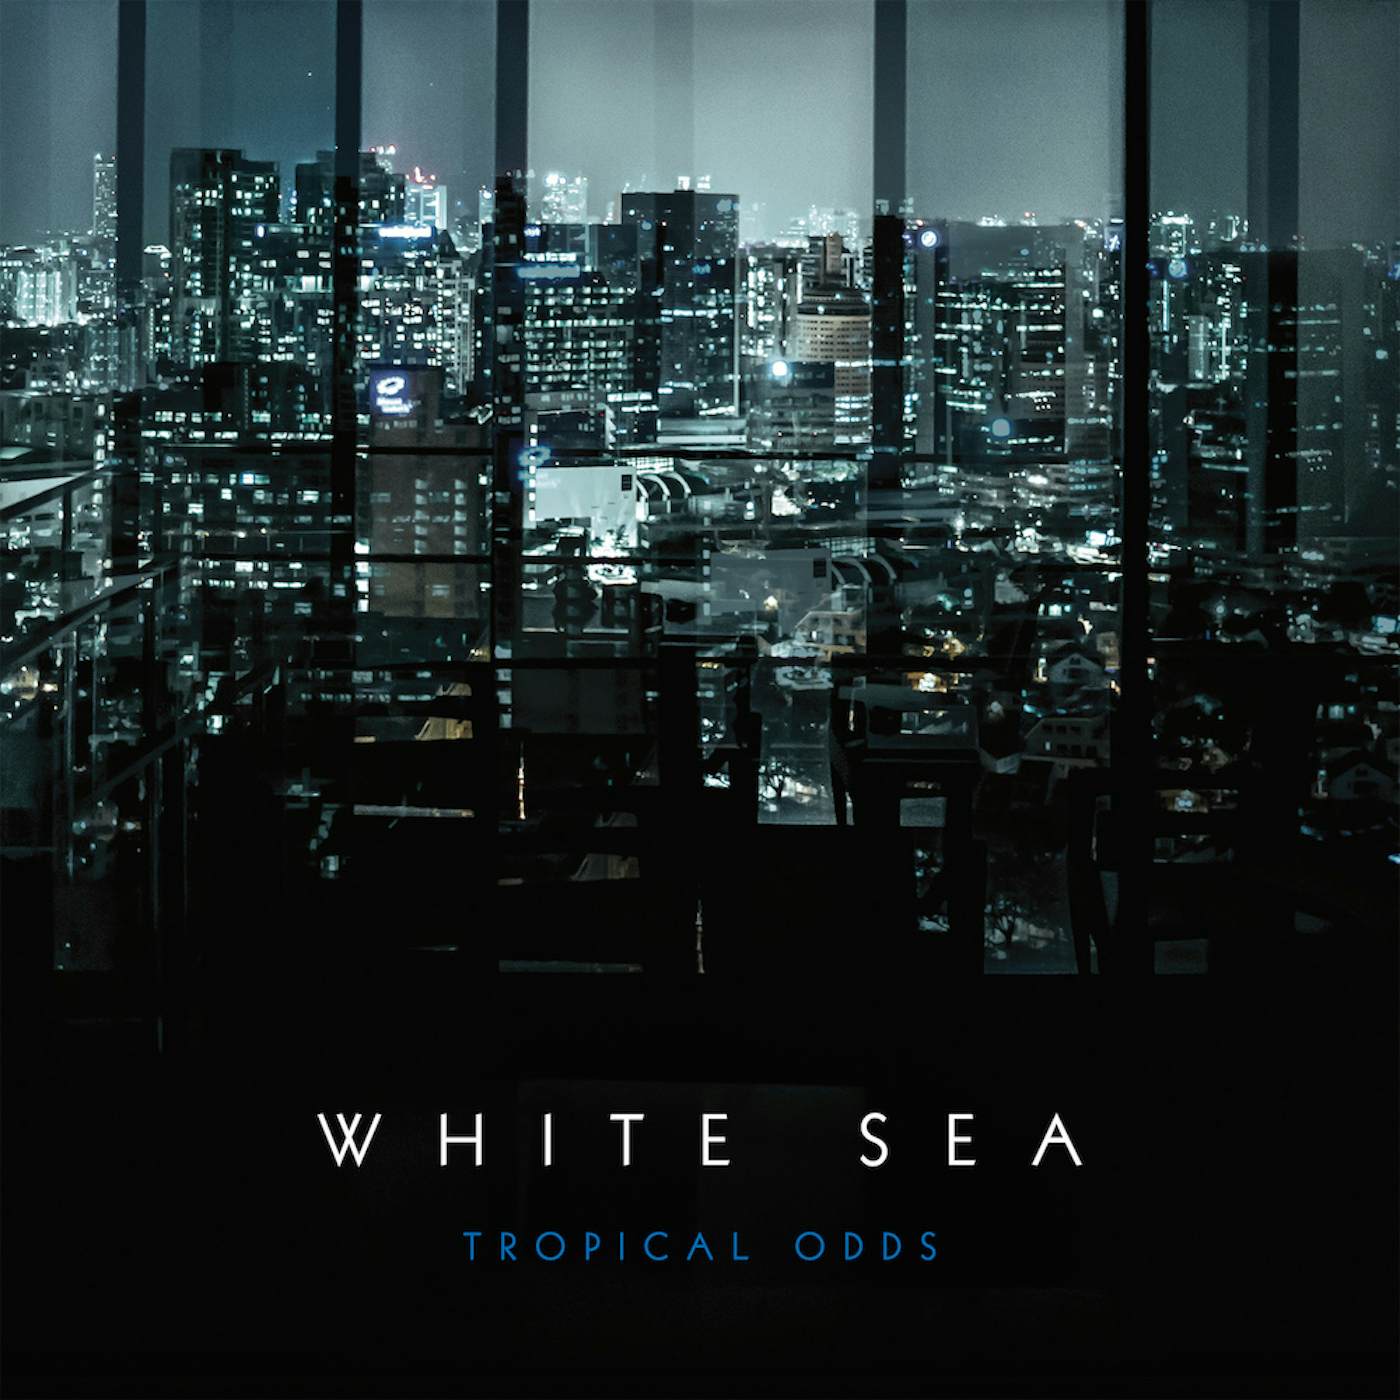 White Sea Tropical Odds Vinyl Record